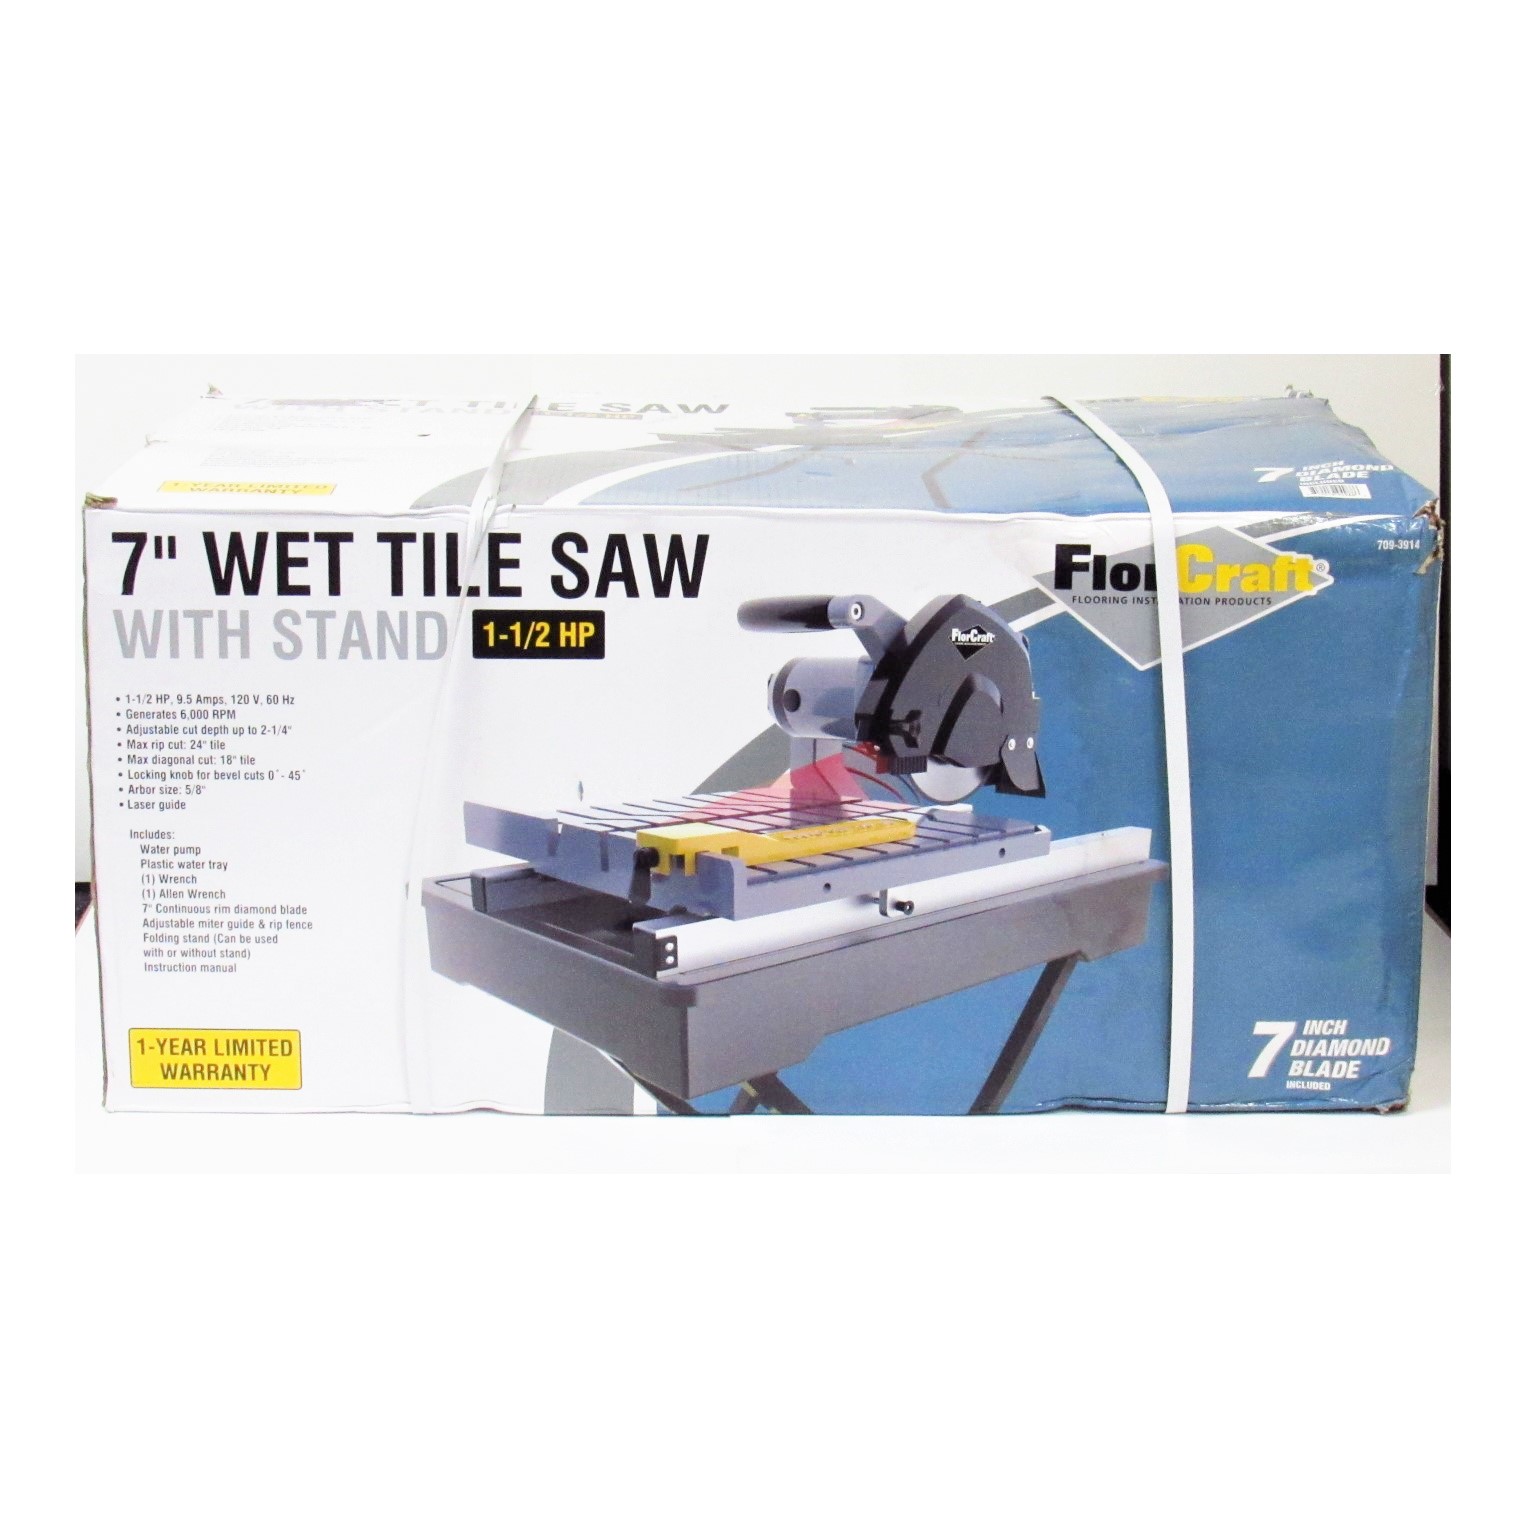 Florcraft 709 3914 7 Wet Tile Saw